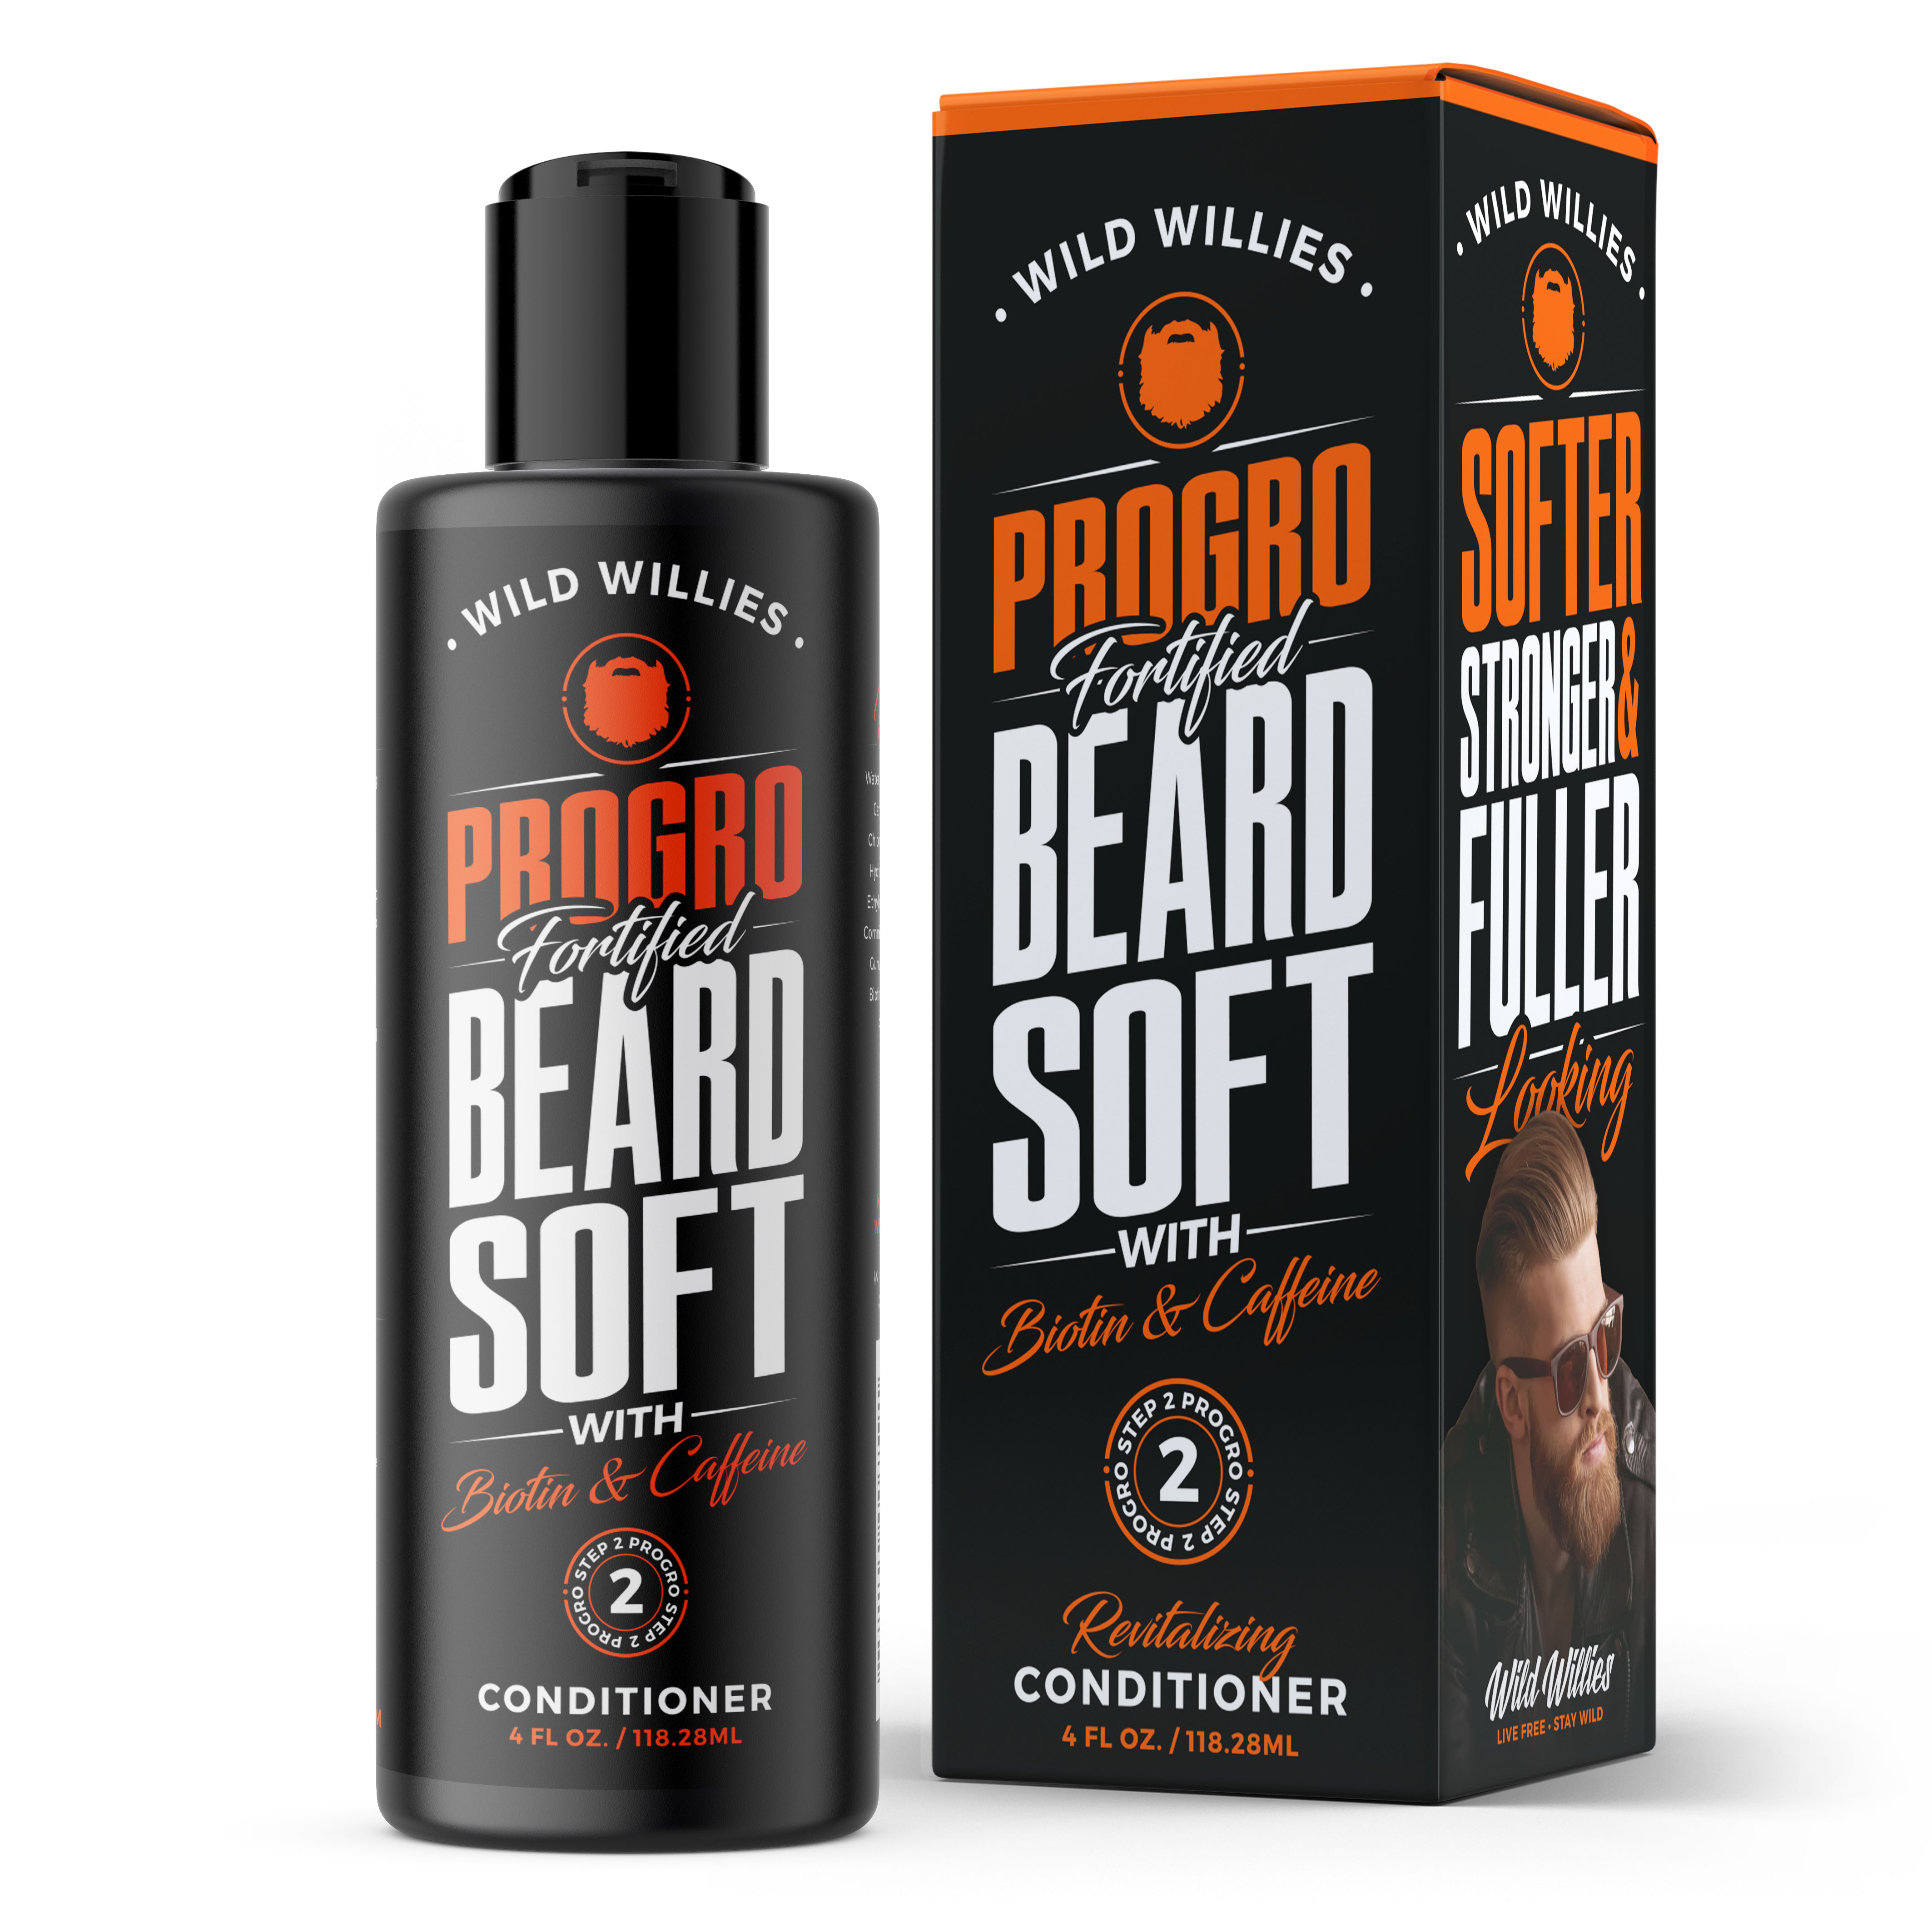 Wild Willies ProGro Moisturizing Fortified Beard Soft Daily Conditioner with Biotin & Caffeine, 4 fl oz - image 1 of 17